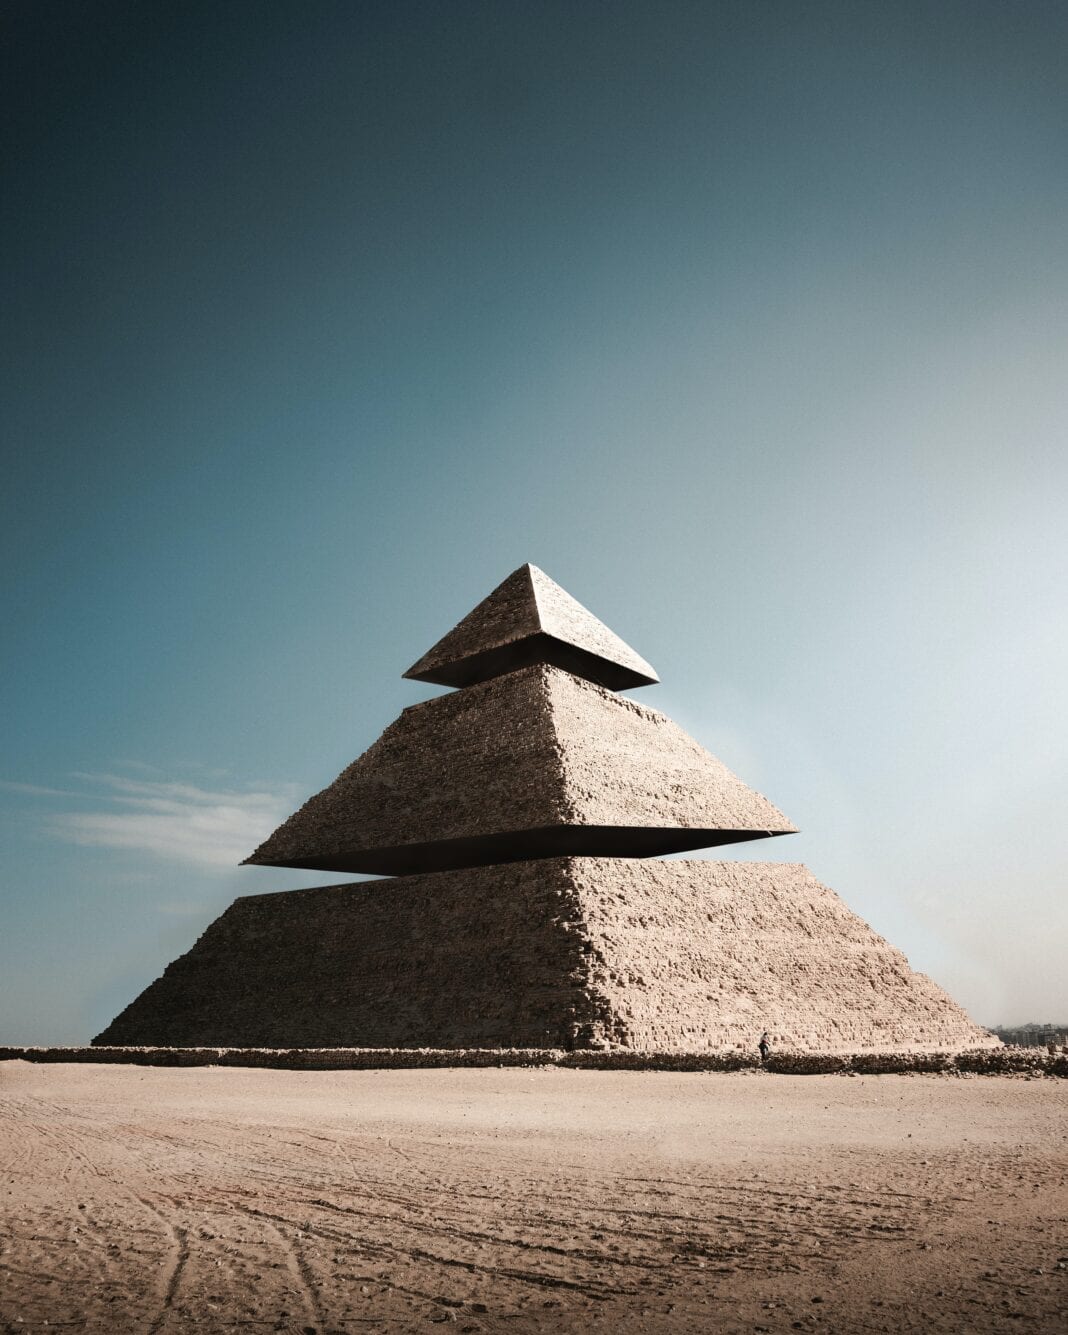 Pyramid of Giza operated into three parts